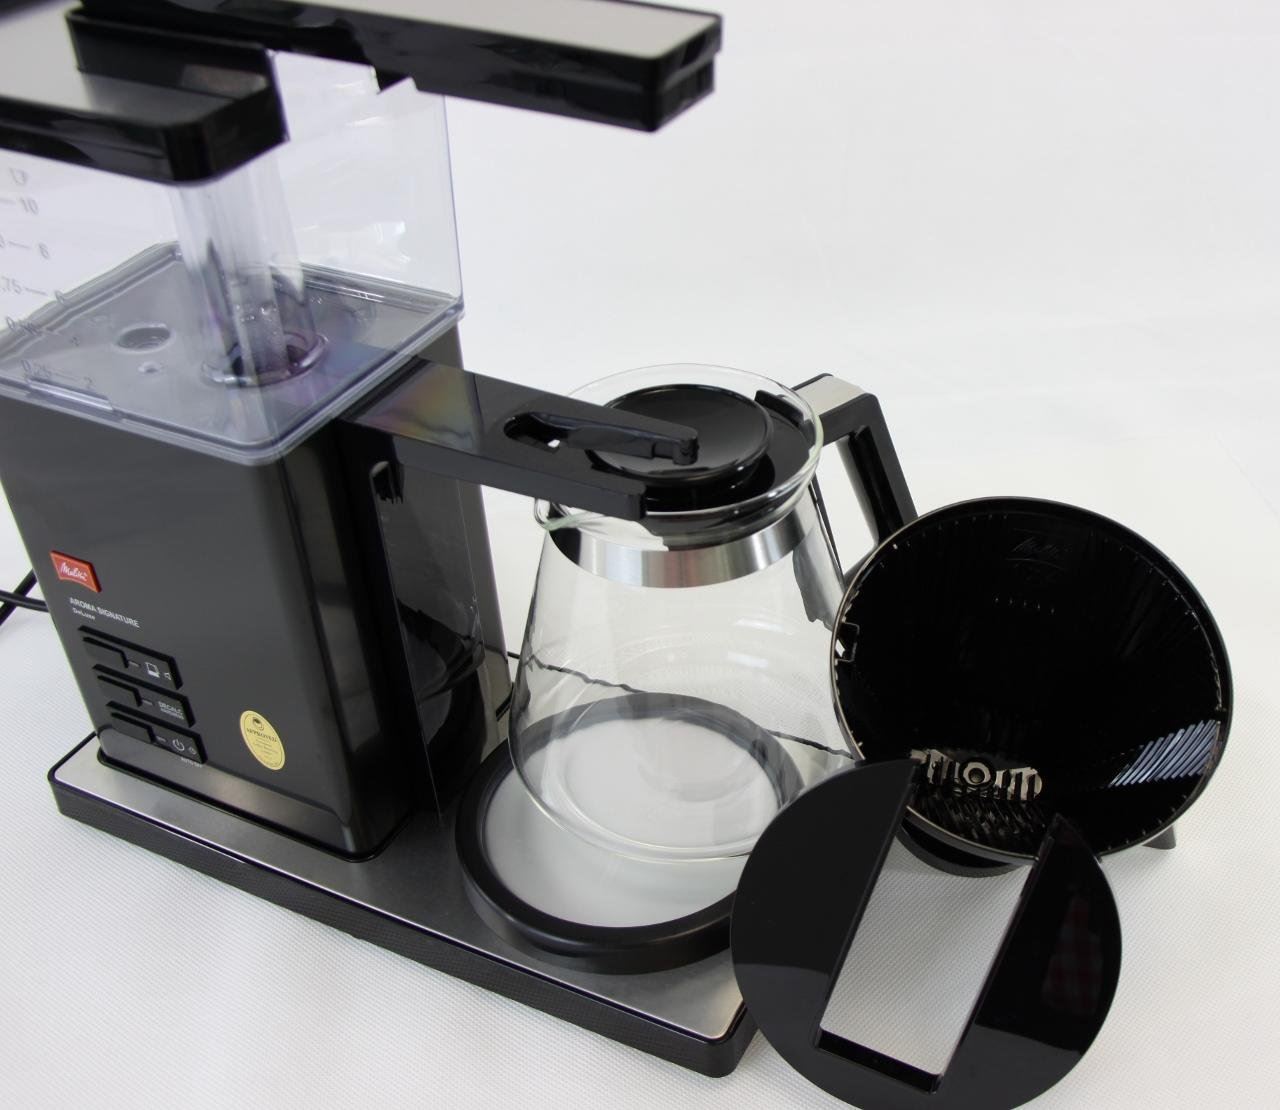 Melitta Aroma Signature De Luxe Filter Coffee Machine